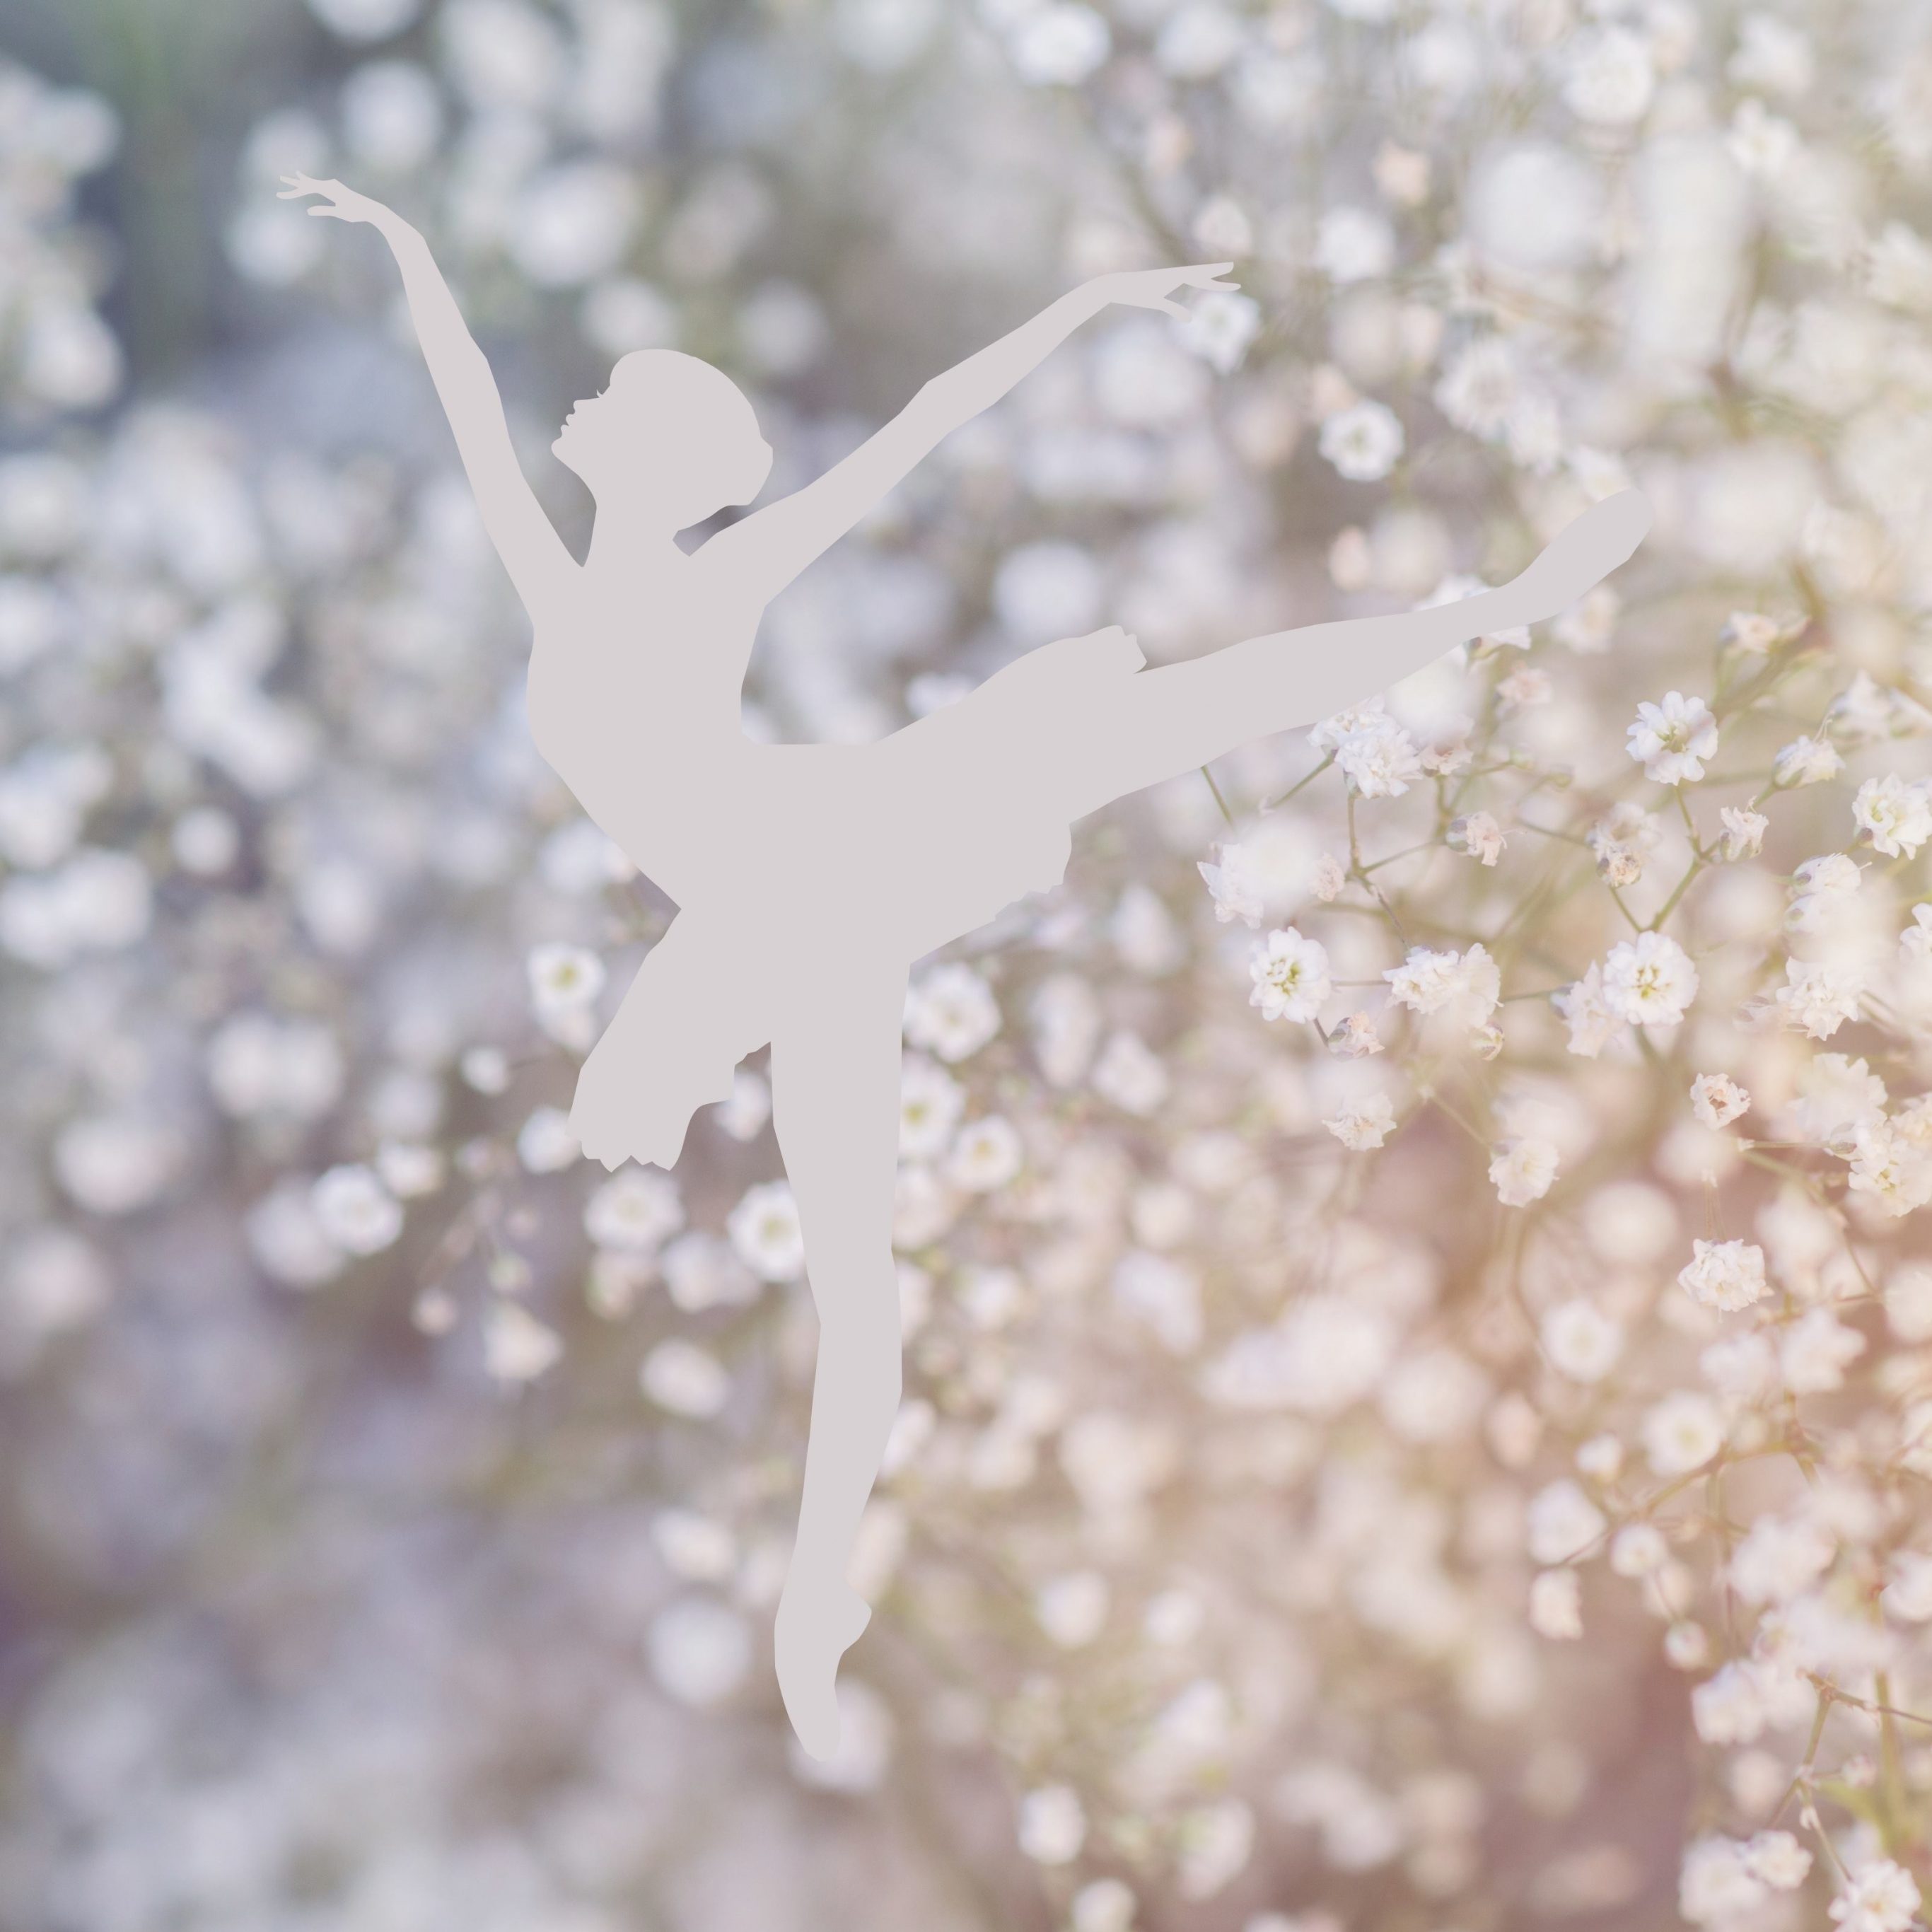 iPad Pro 12.9 wallpapers Ballerina Girl Dance White Dandelion Flowers iPad Wallpaper